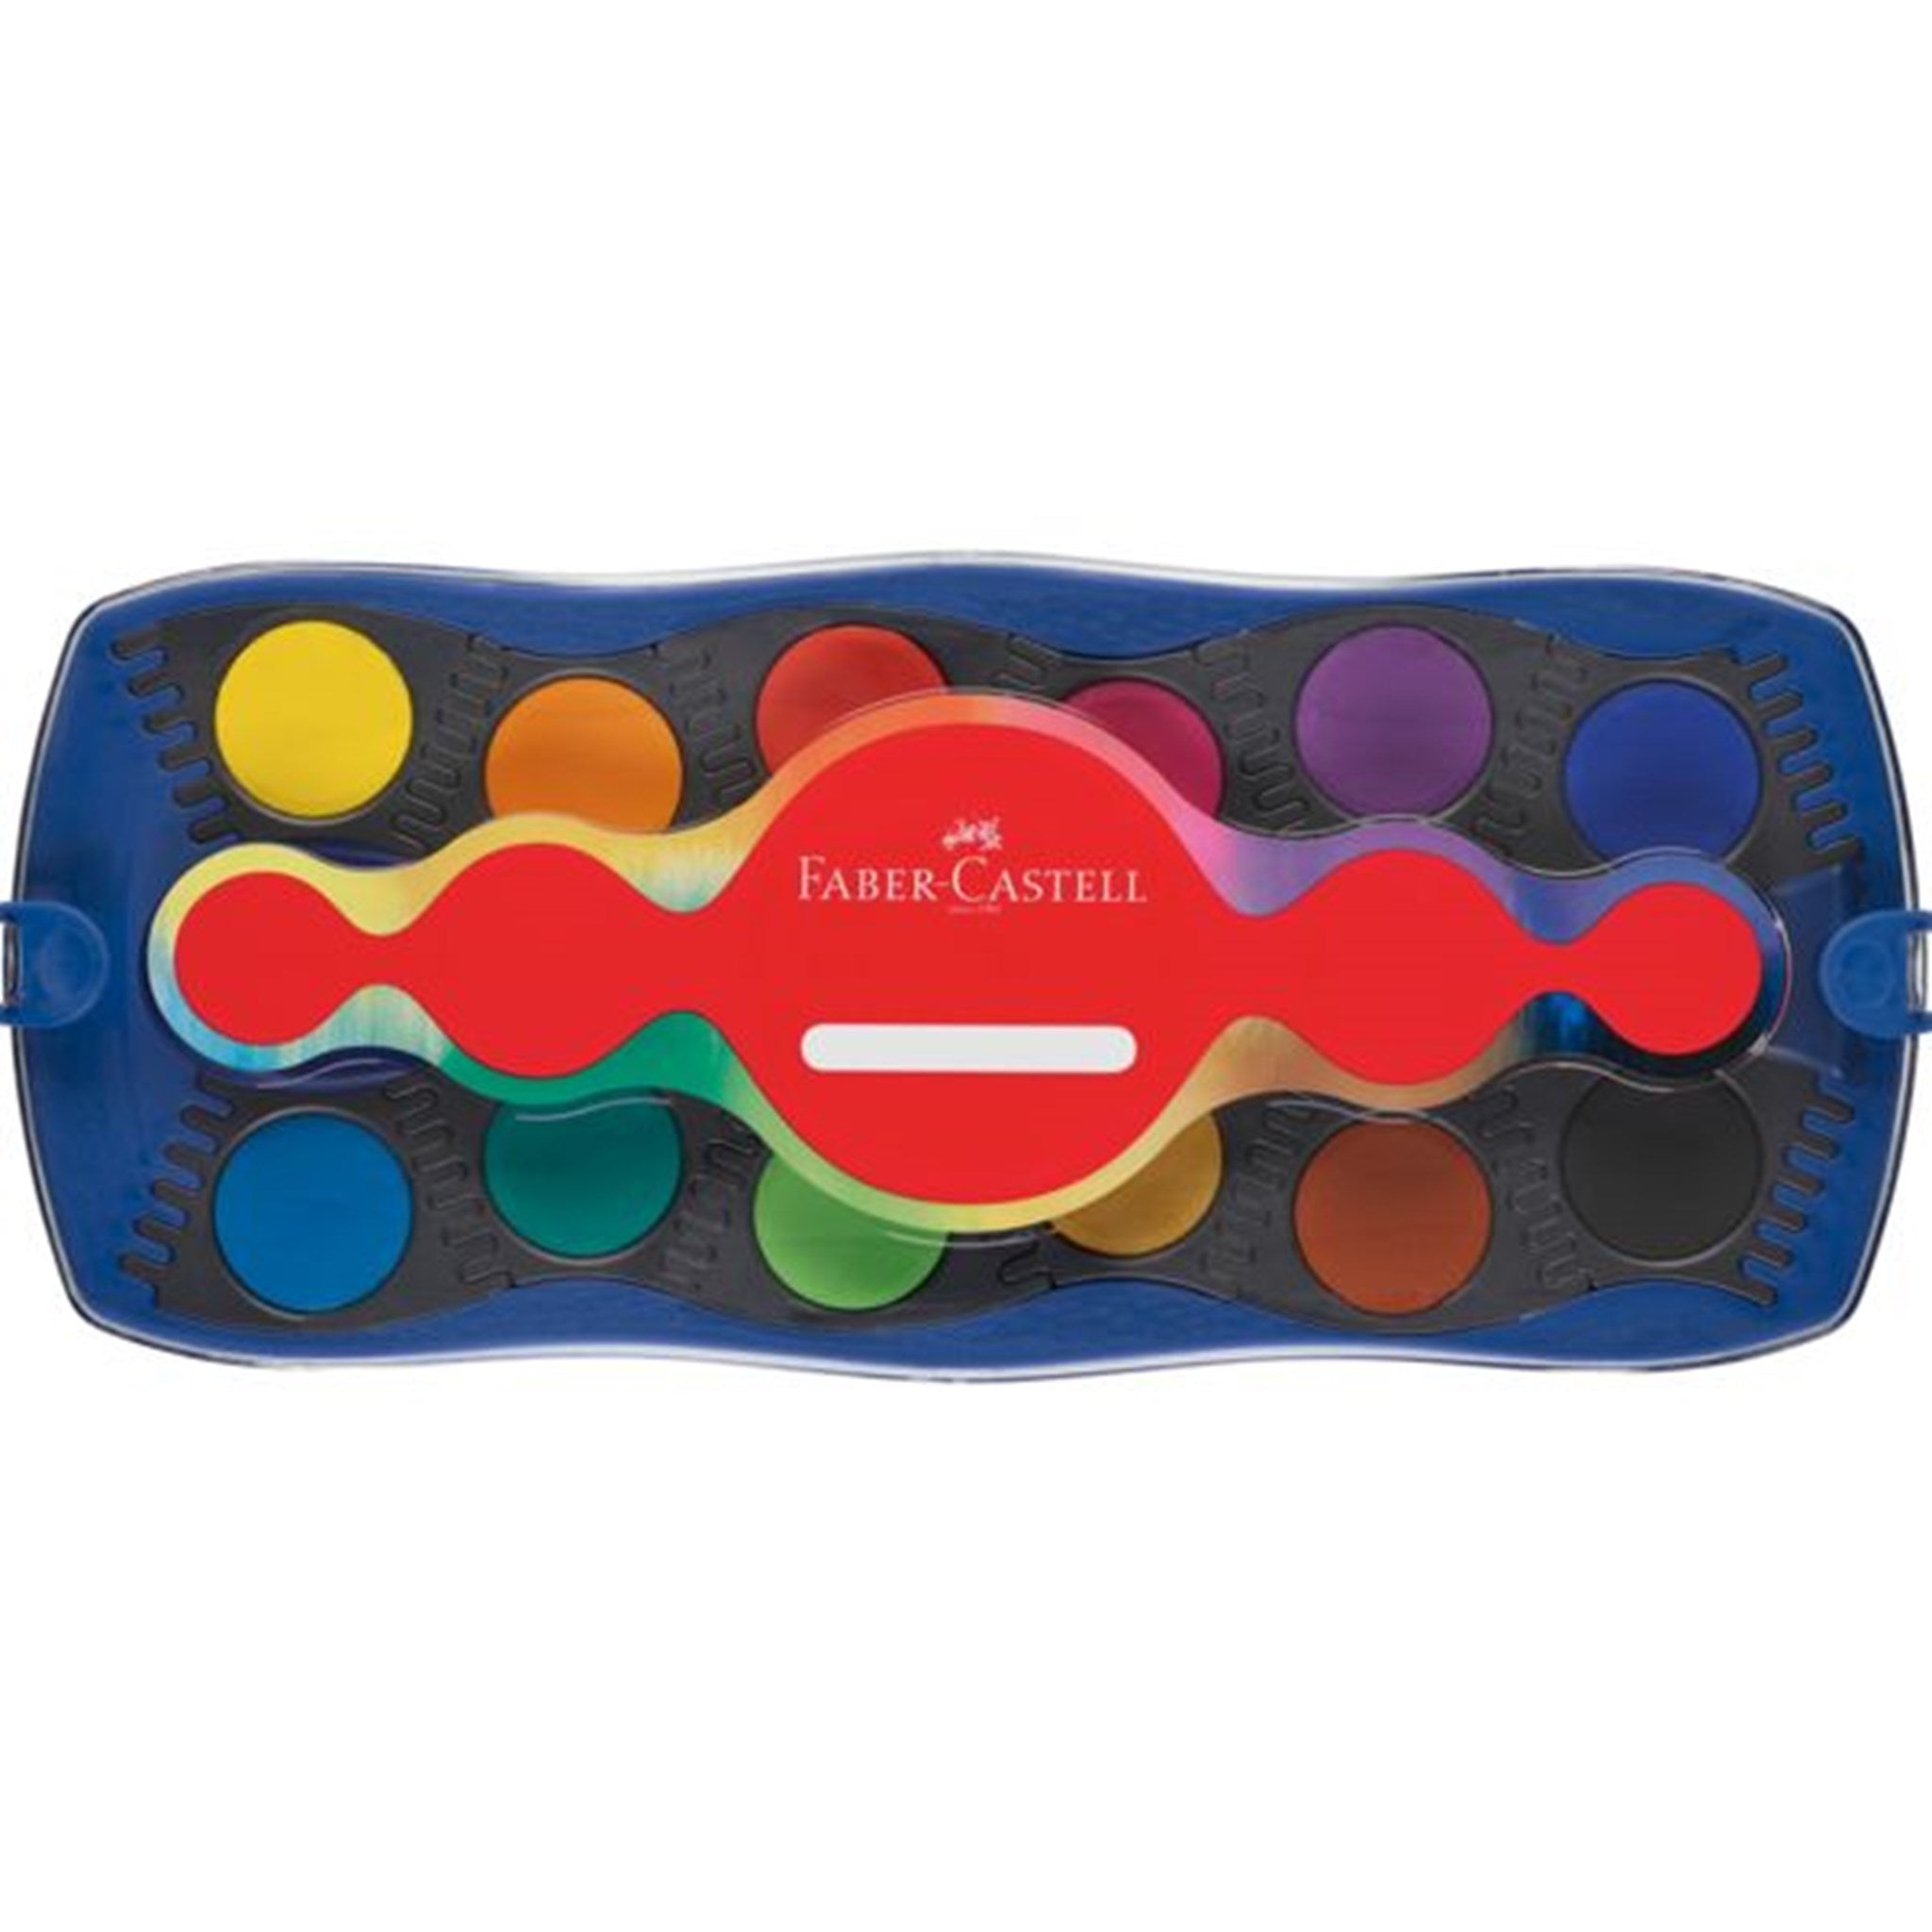 Faber Castell Connector 色盒 12 种颜色不仅仅是普通的铅笔盒 2